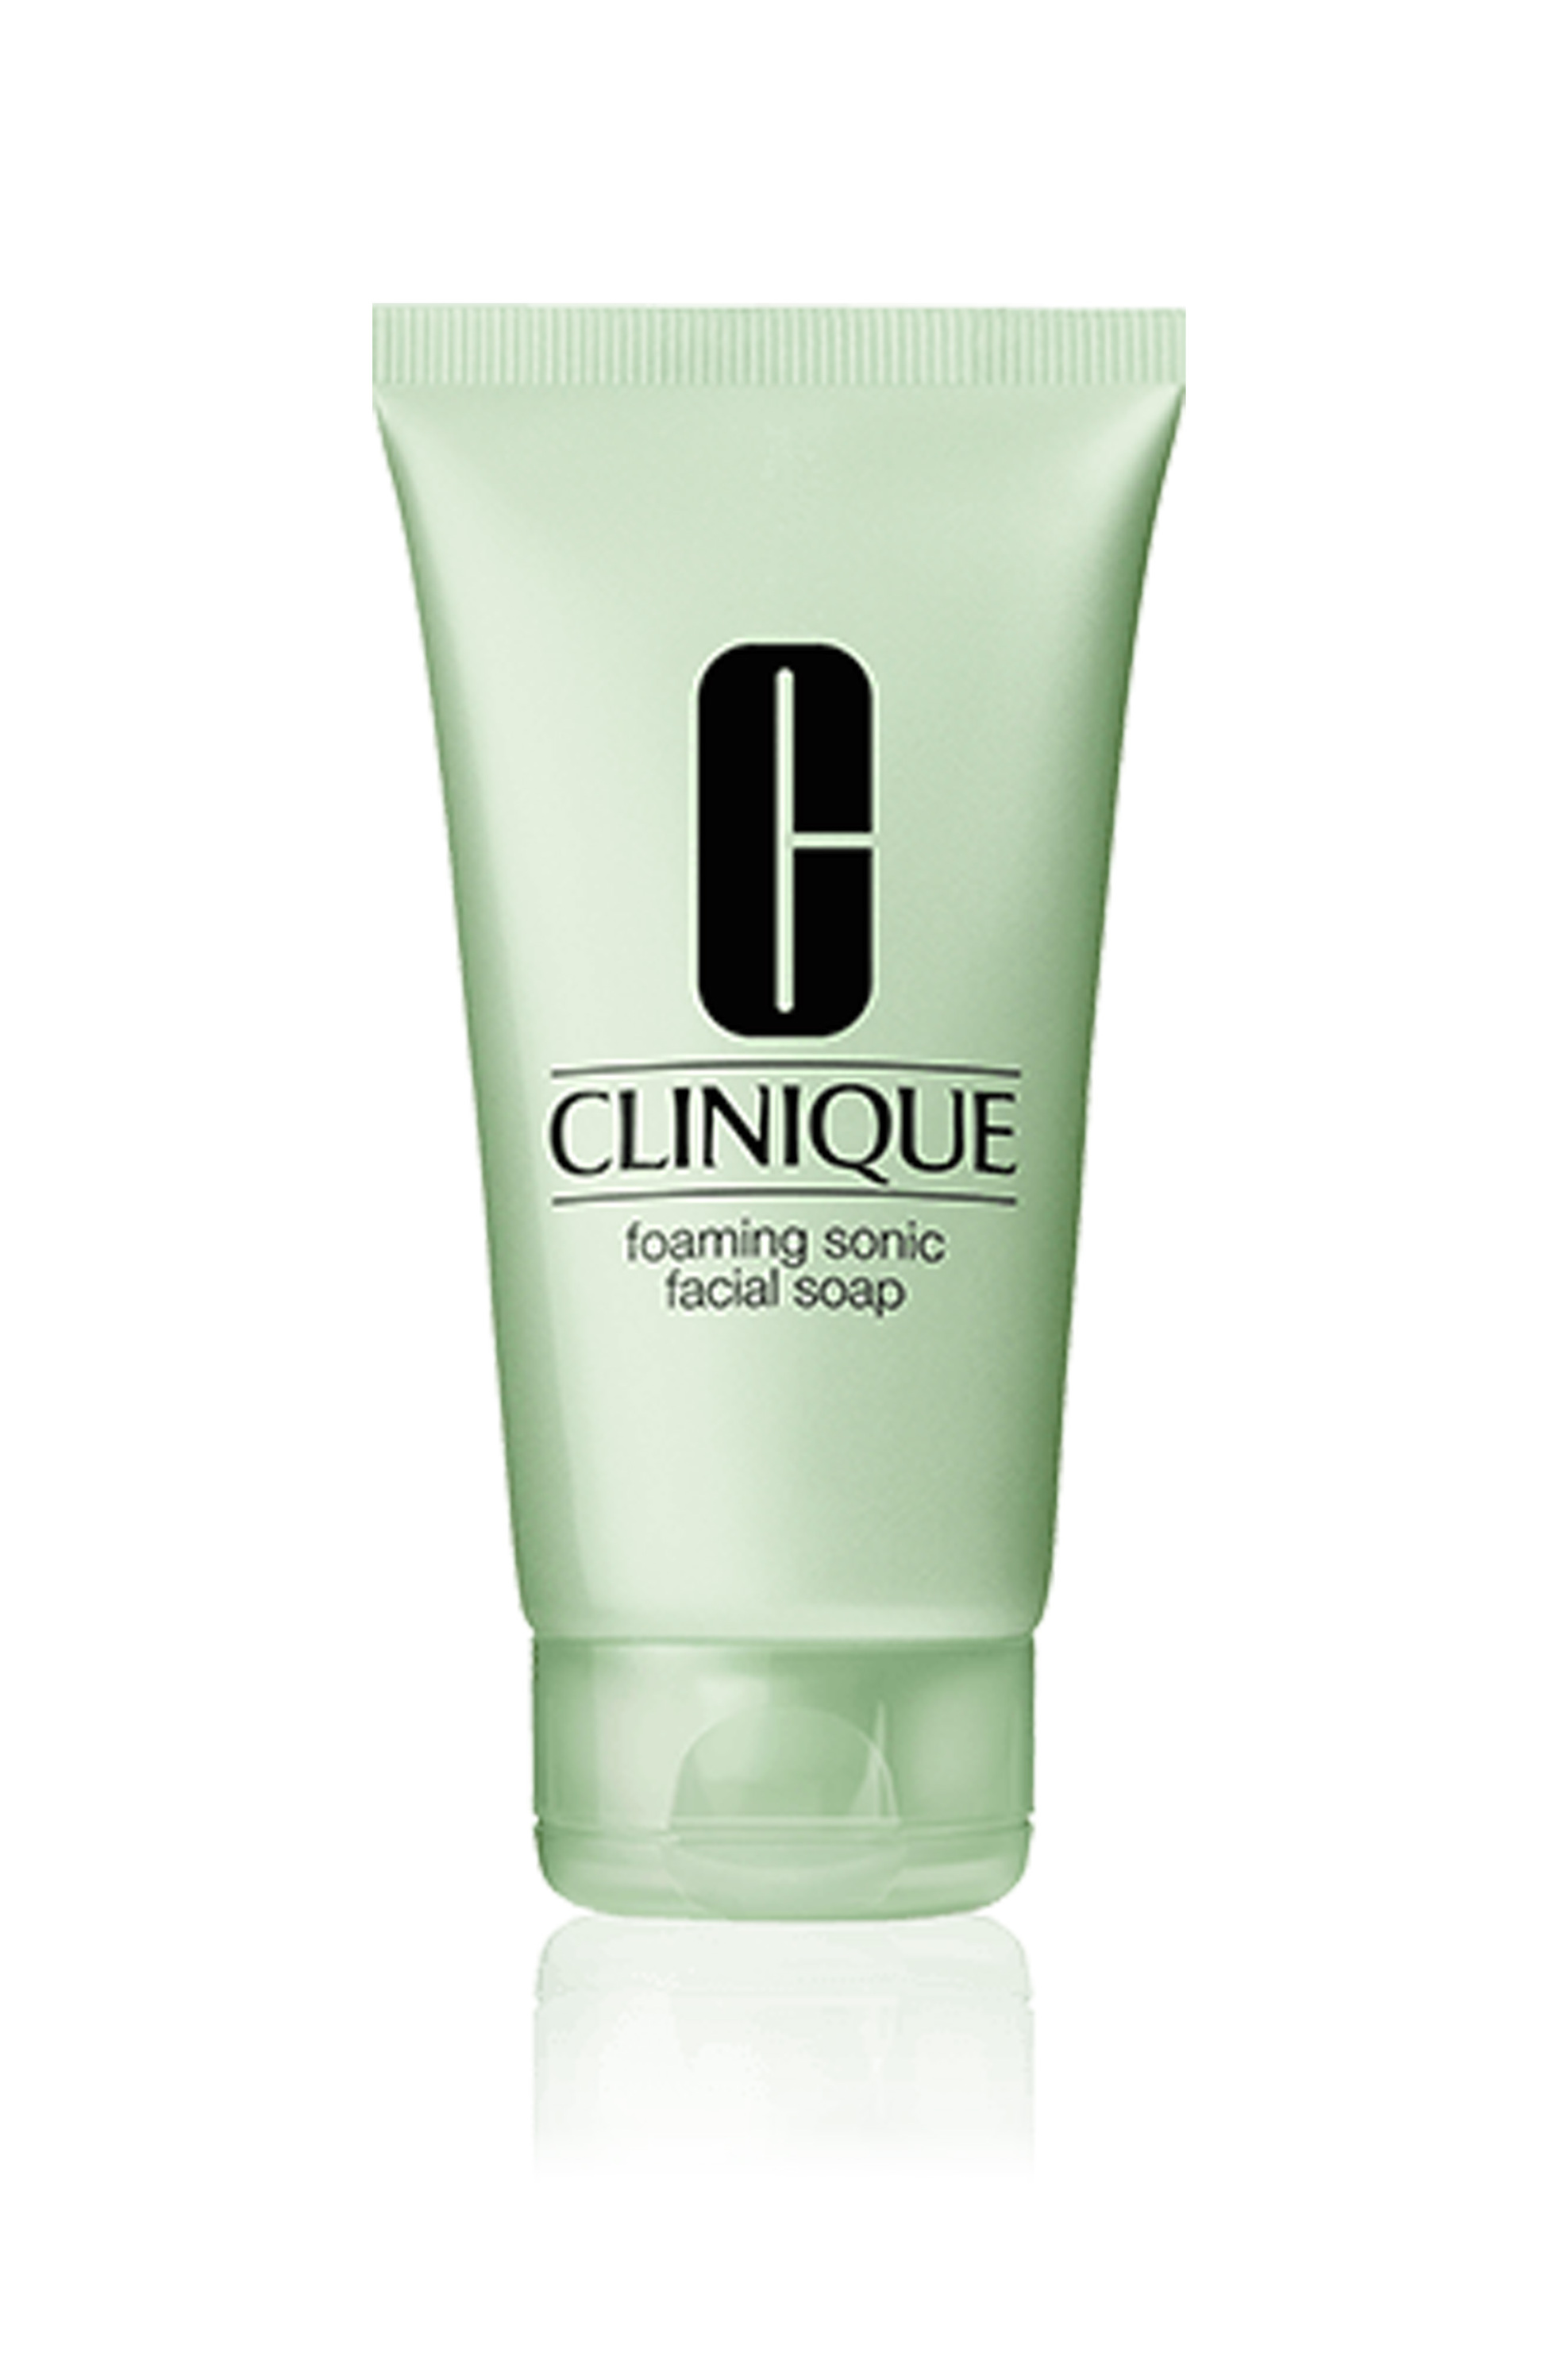 Clinique Foaming Sonic Facial Soap 150 ml - Z4KL010000 959207501193